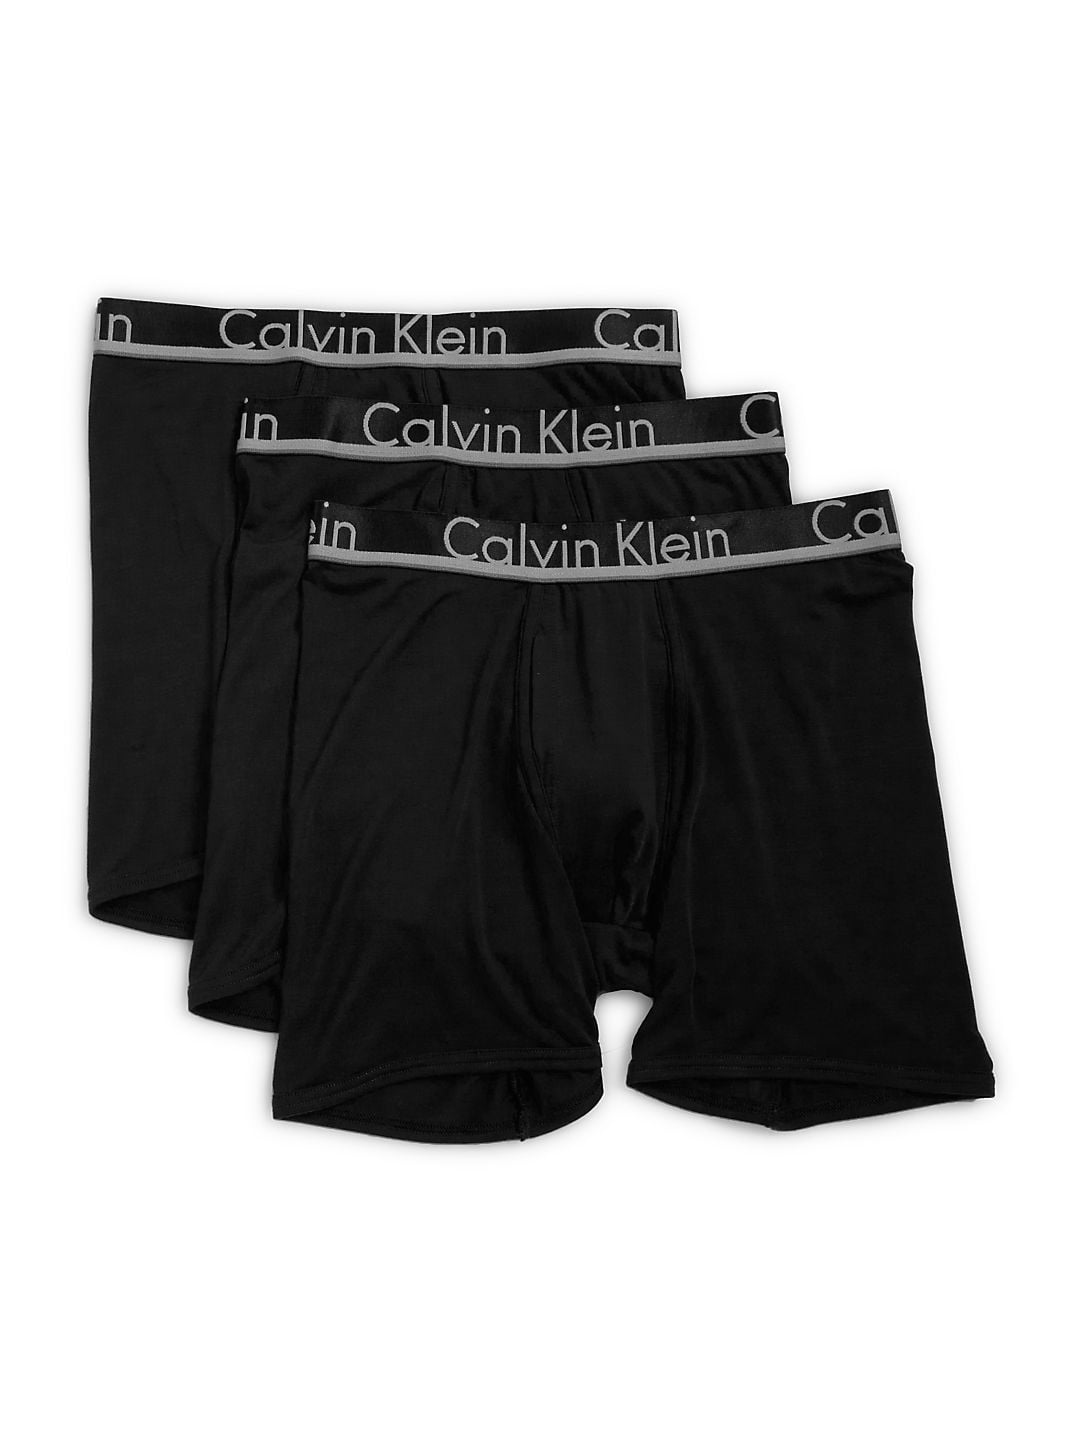 Likeur canvas Investeren Calvin Klein Men 3 Pack Comfort Microfiber Boxer Briefs - Walmart.com